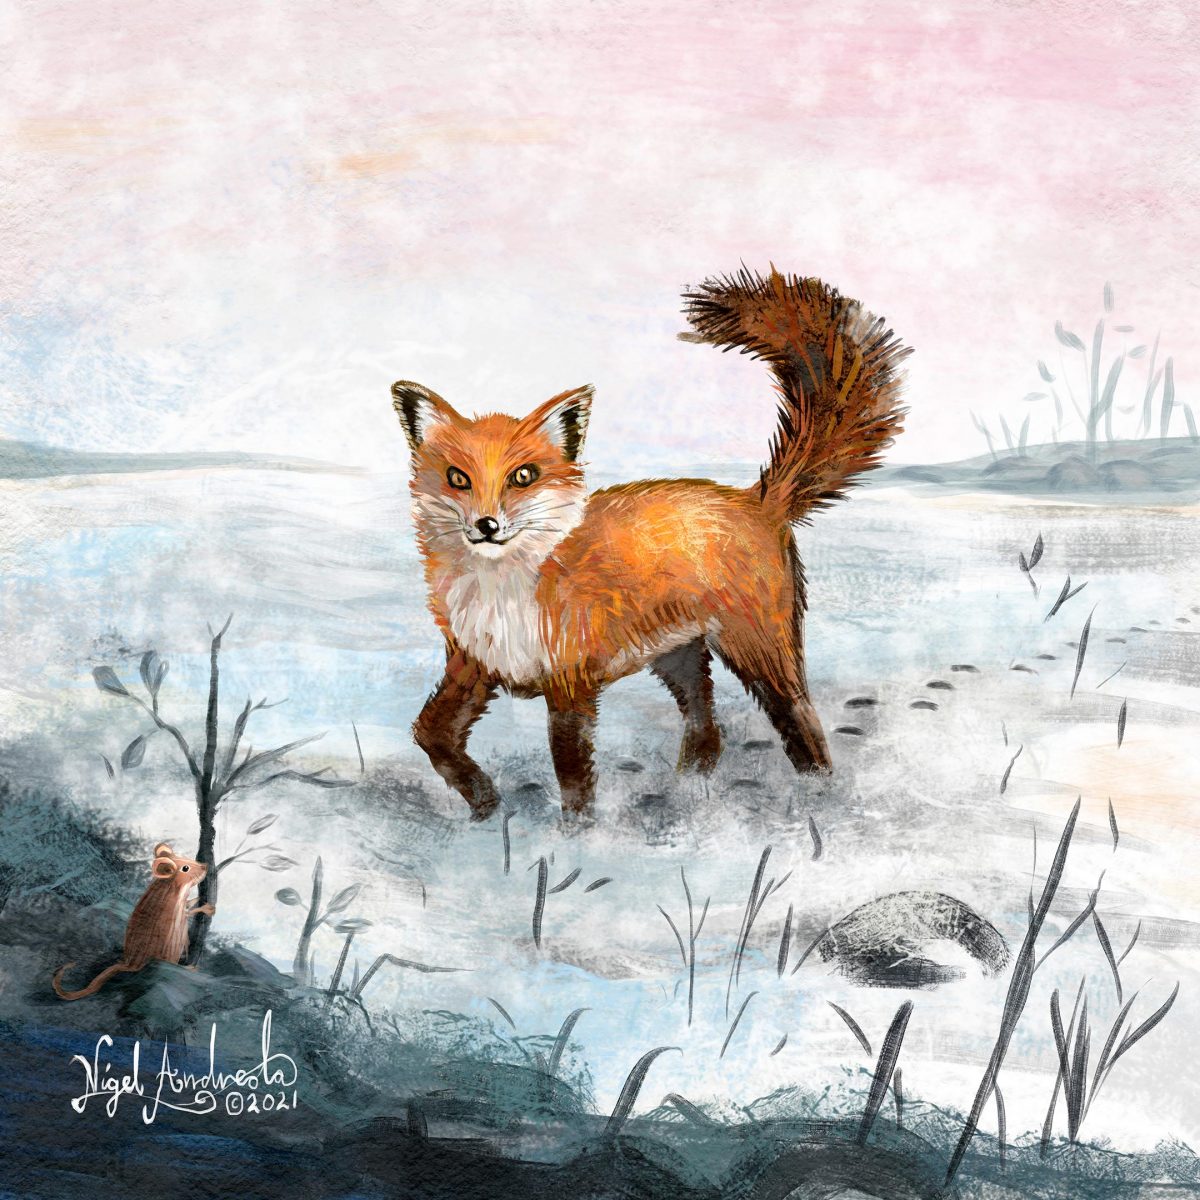 Fox Tracks album cover by Nigel Andreola